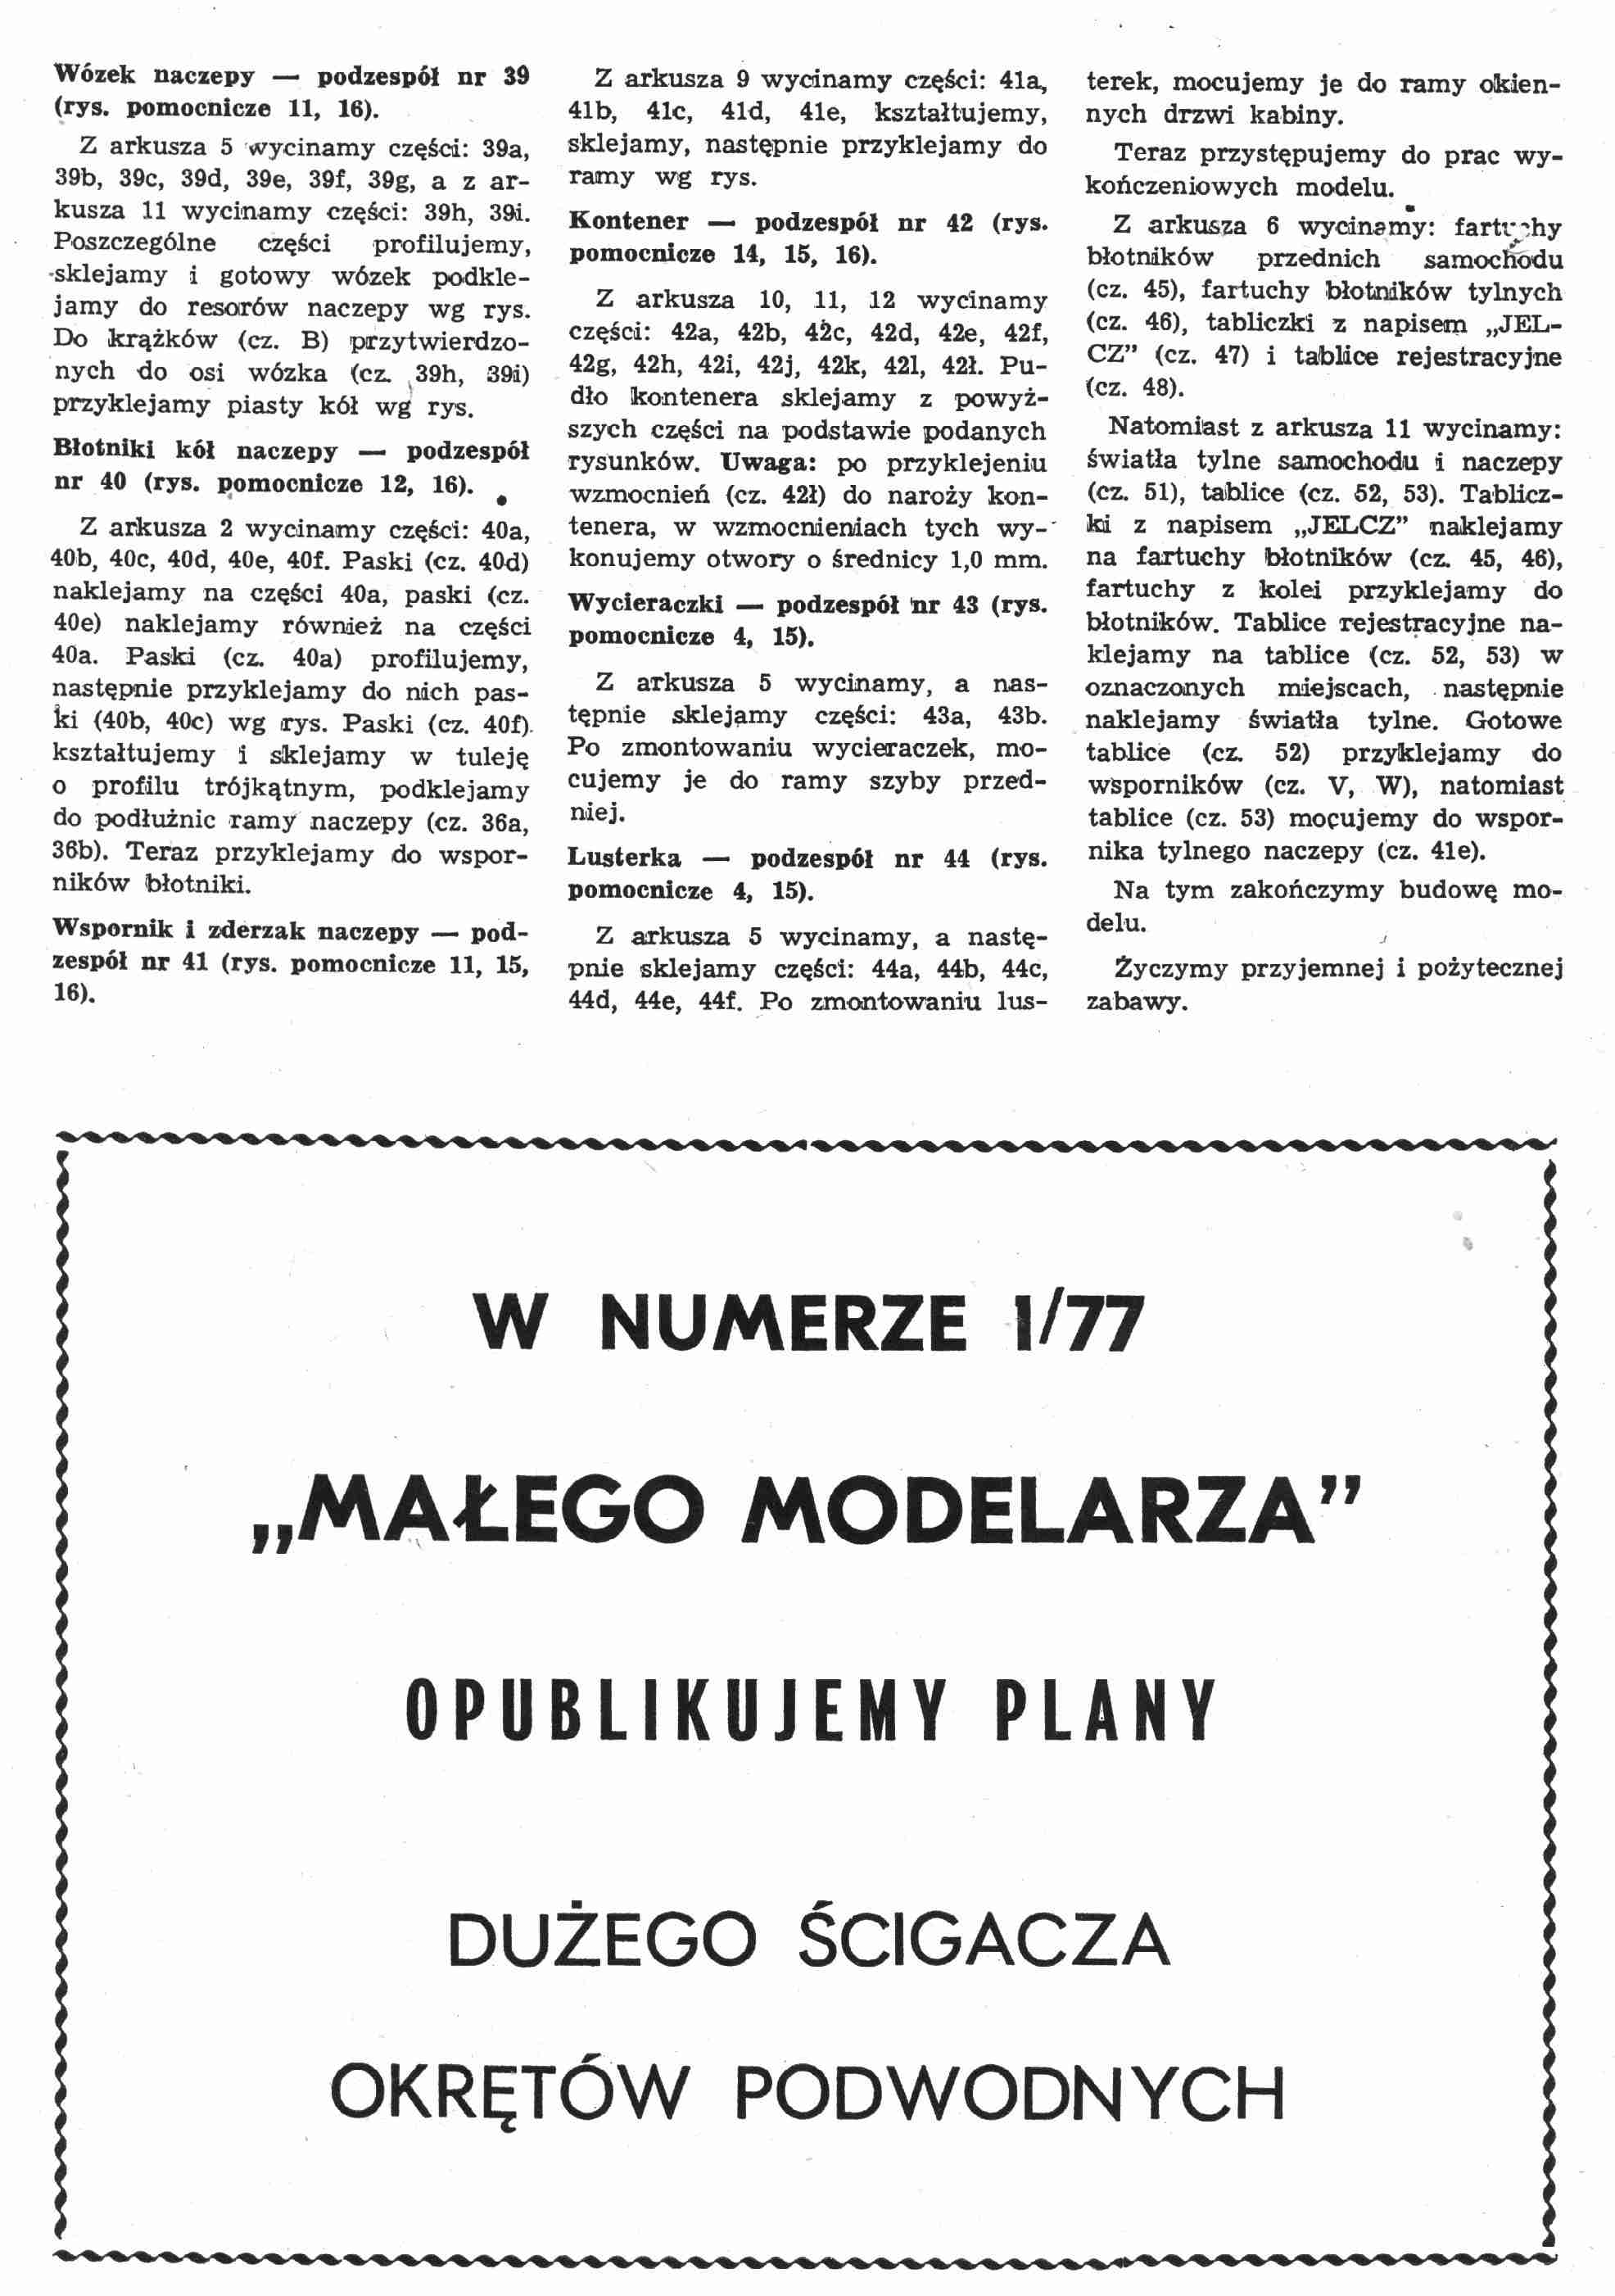 "Maly Modelarz" 11-12, 1976, 12 с.